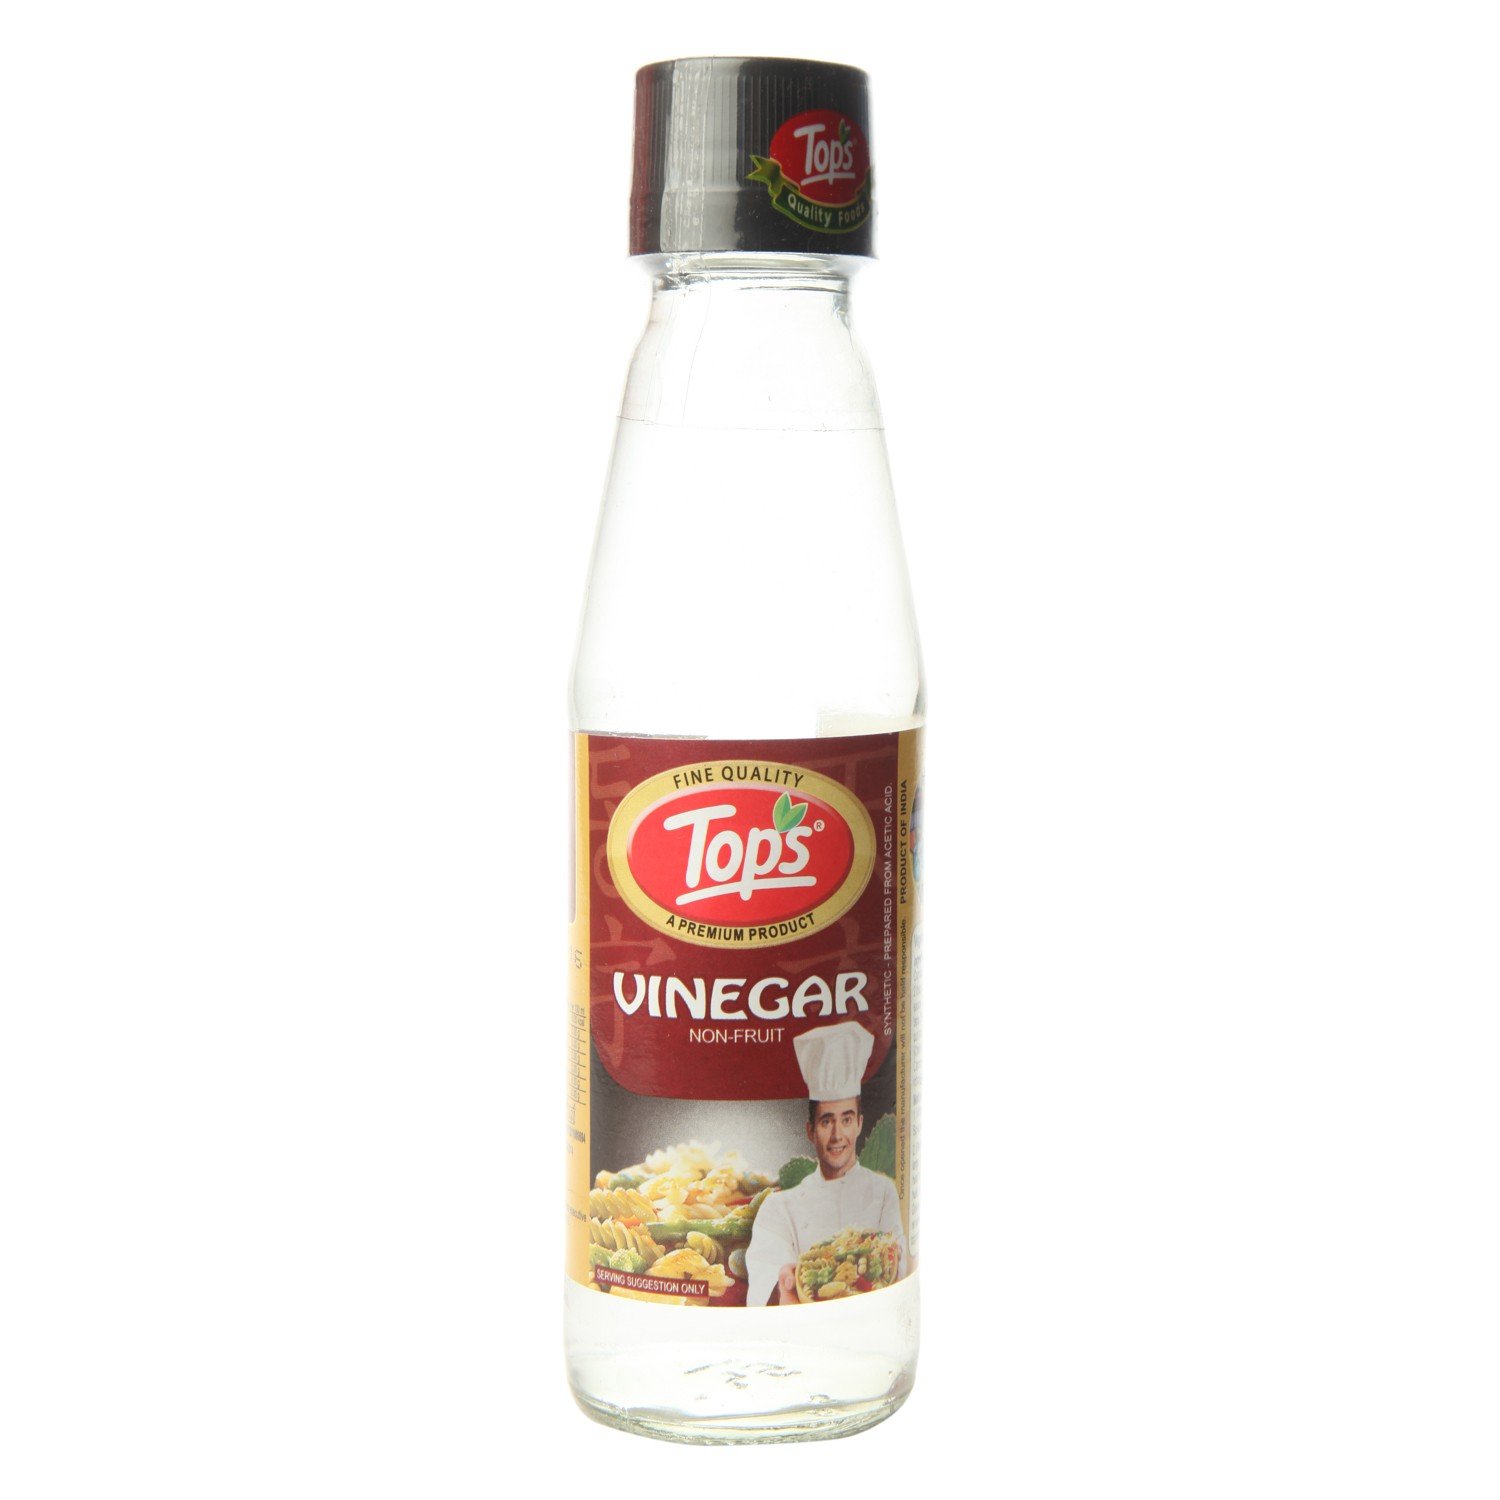 a bottle of tops vinegar